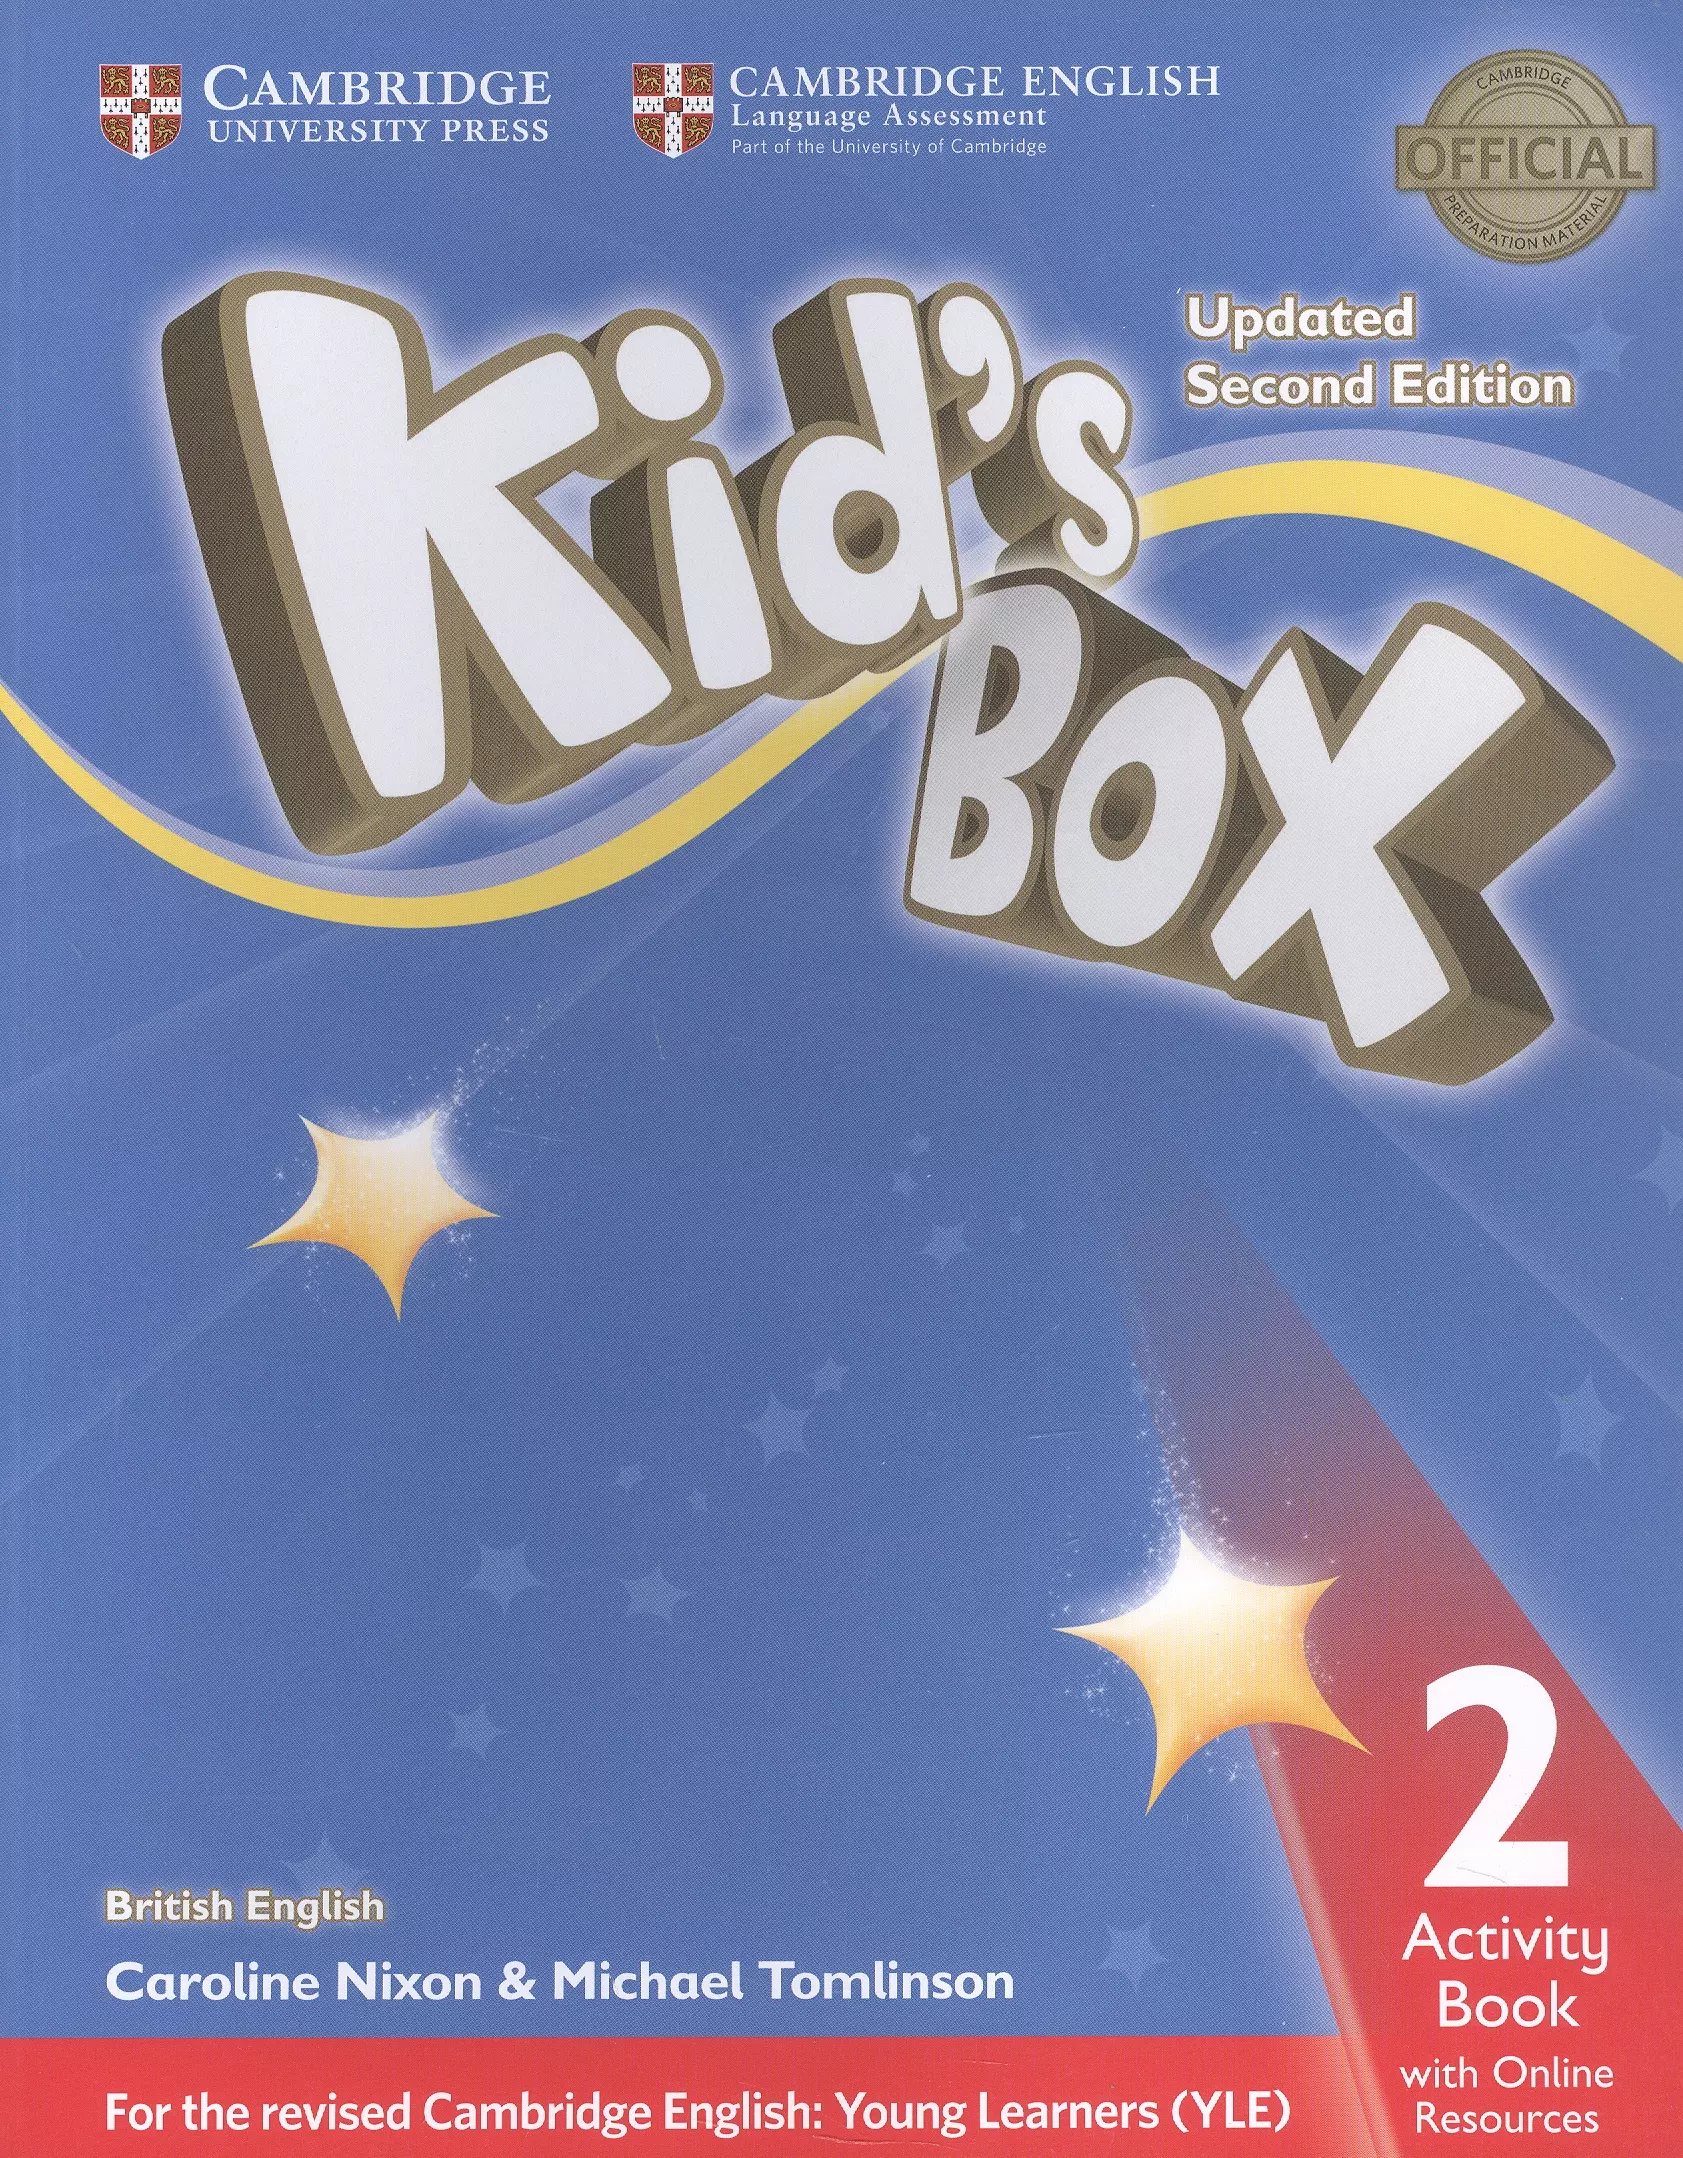 Tomlinson Michael, Nixon Caroline - Kids Box. British English. Activity Book 2 with Online Resources. Updated Second Edition